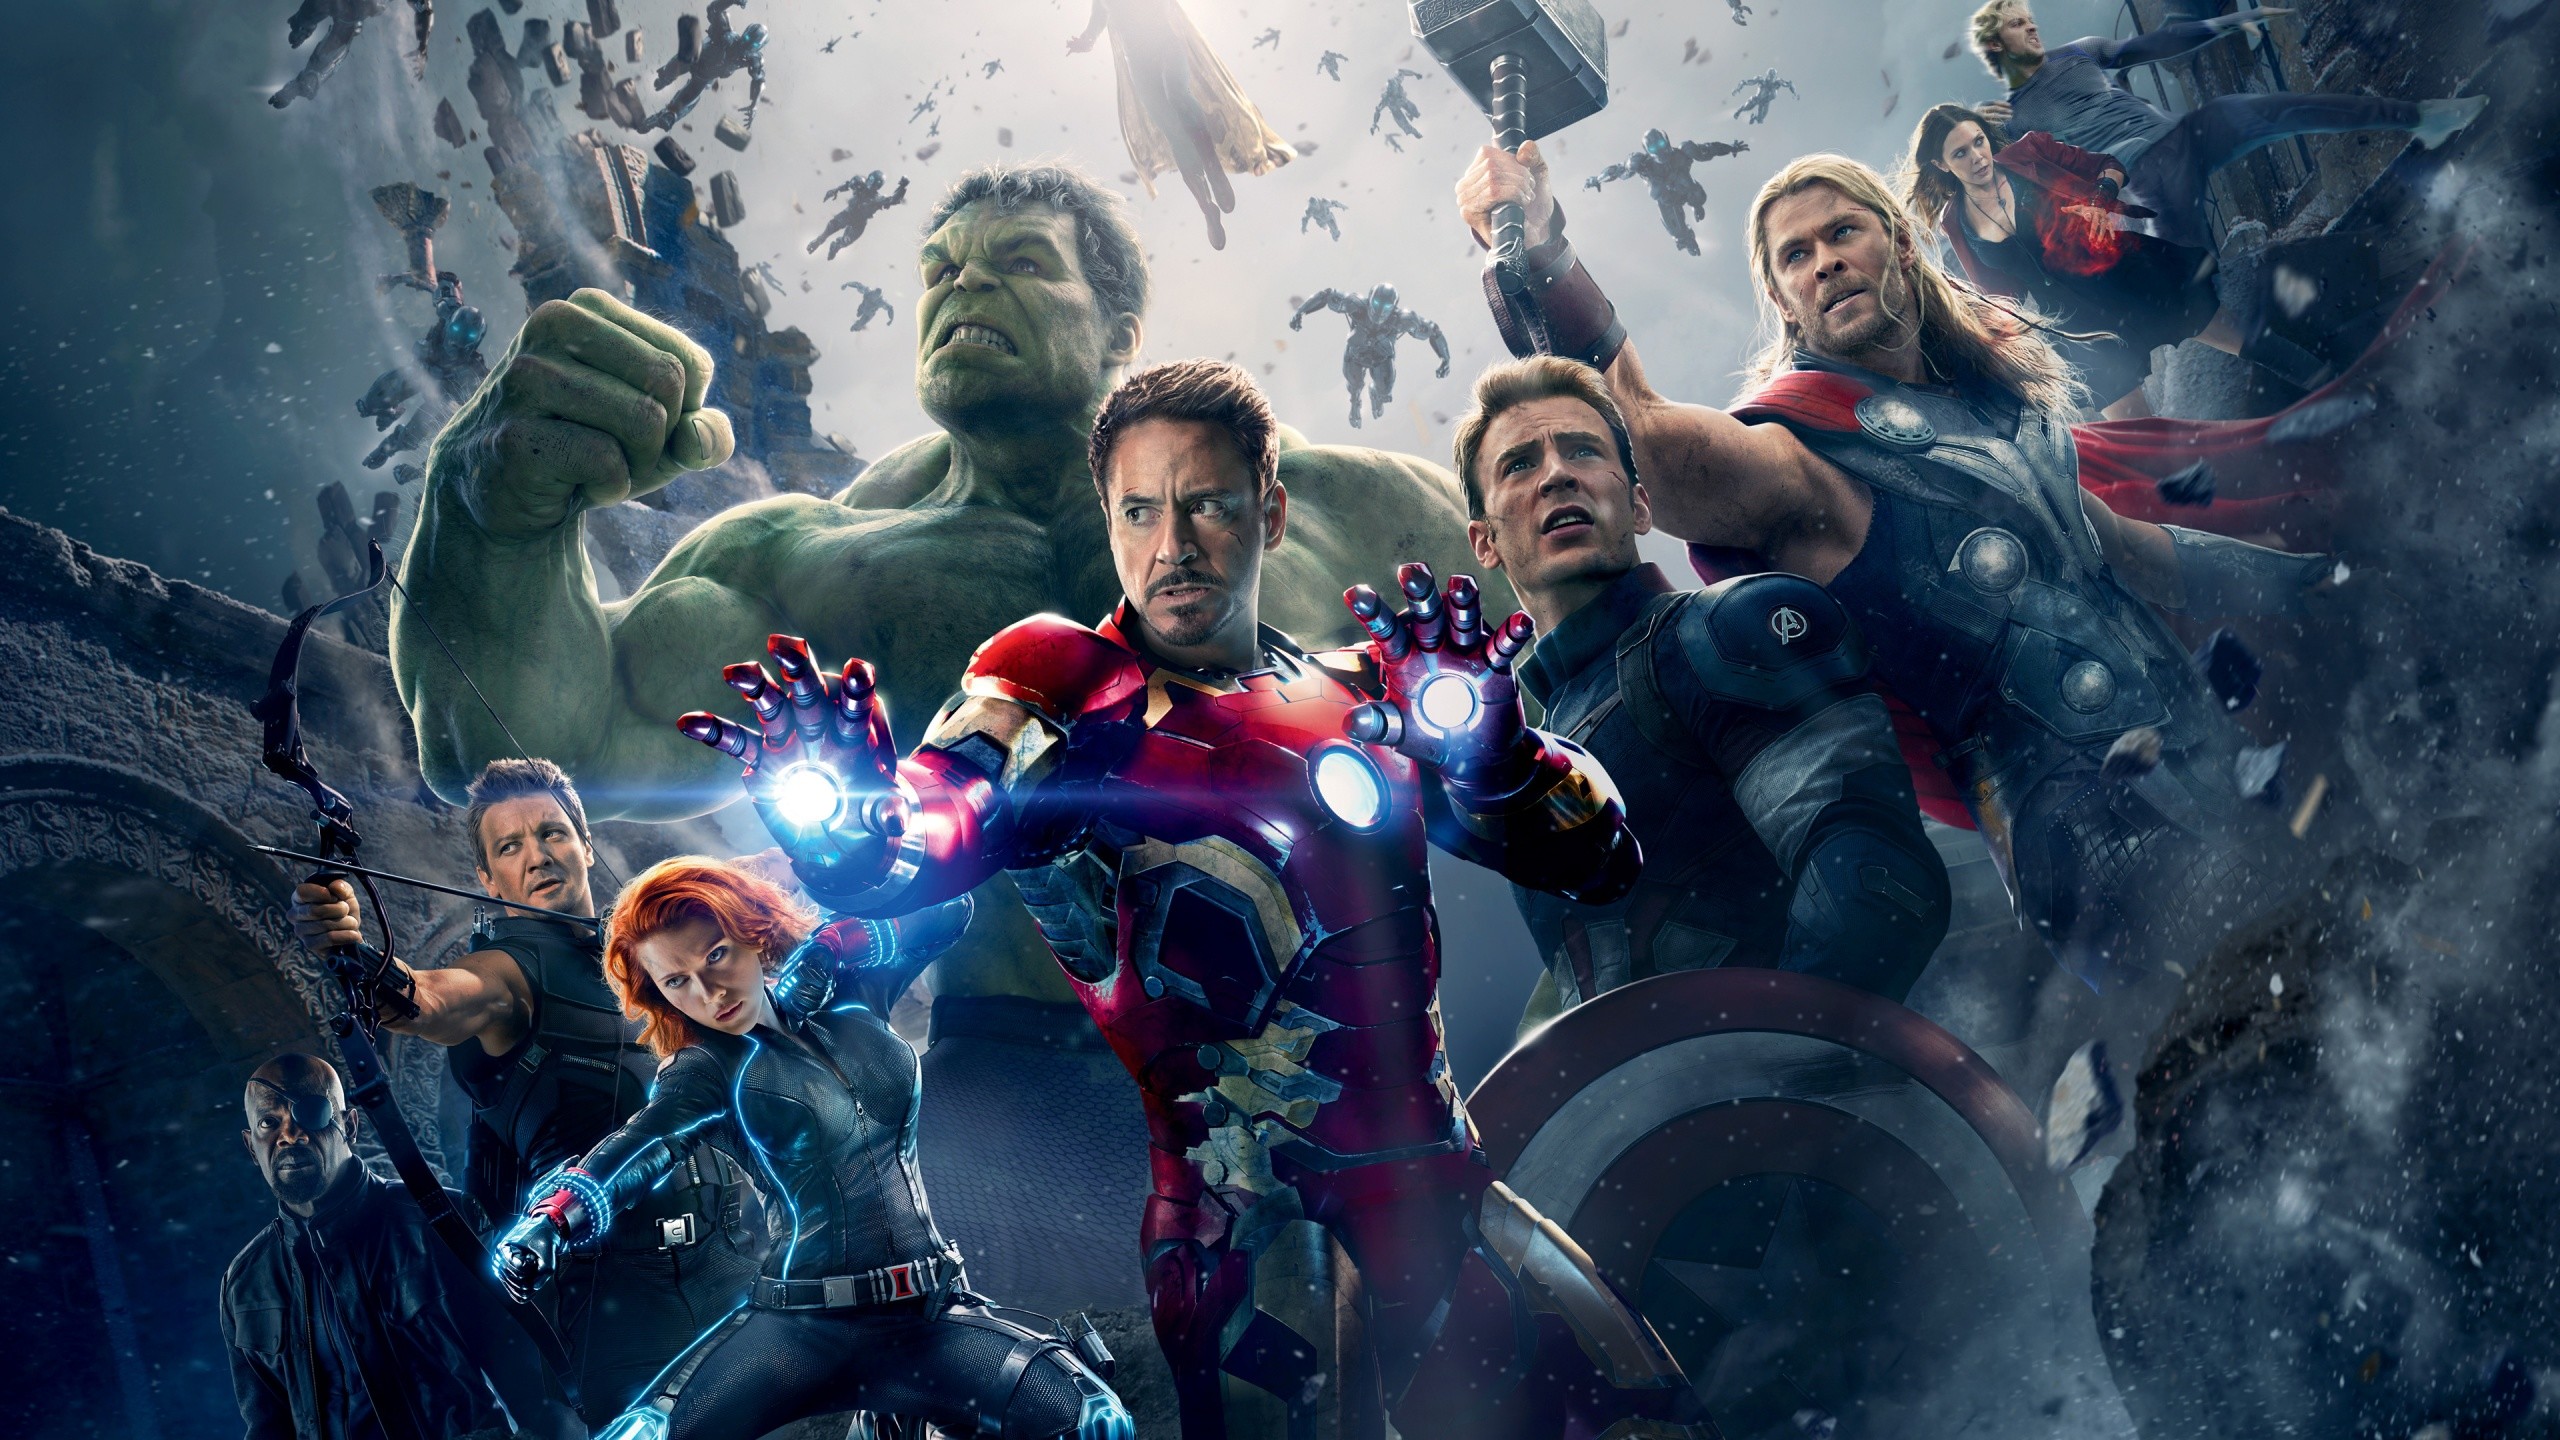 2560x1440 Avengers Infinity War Film Wallpaper HD Download For Desktop